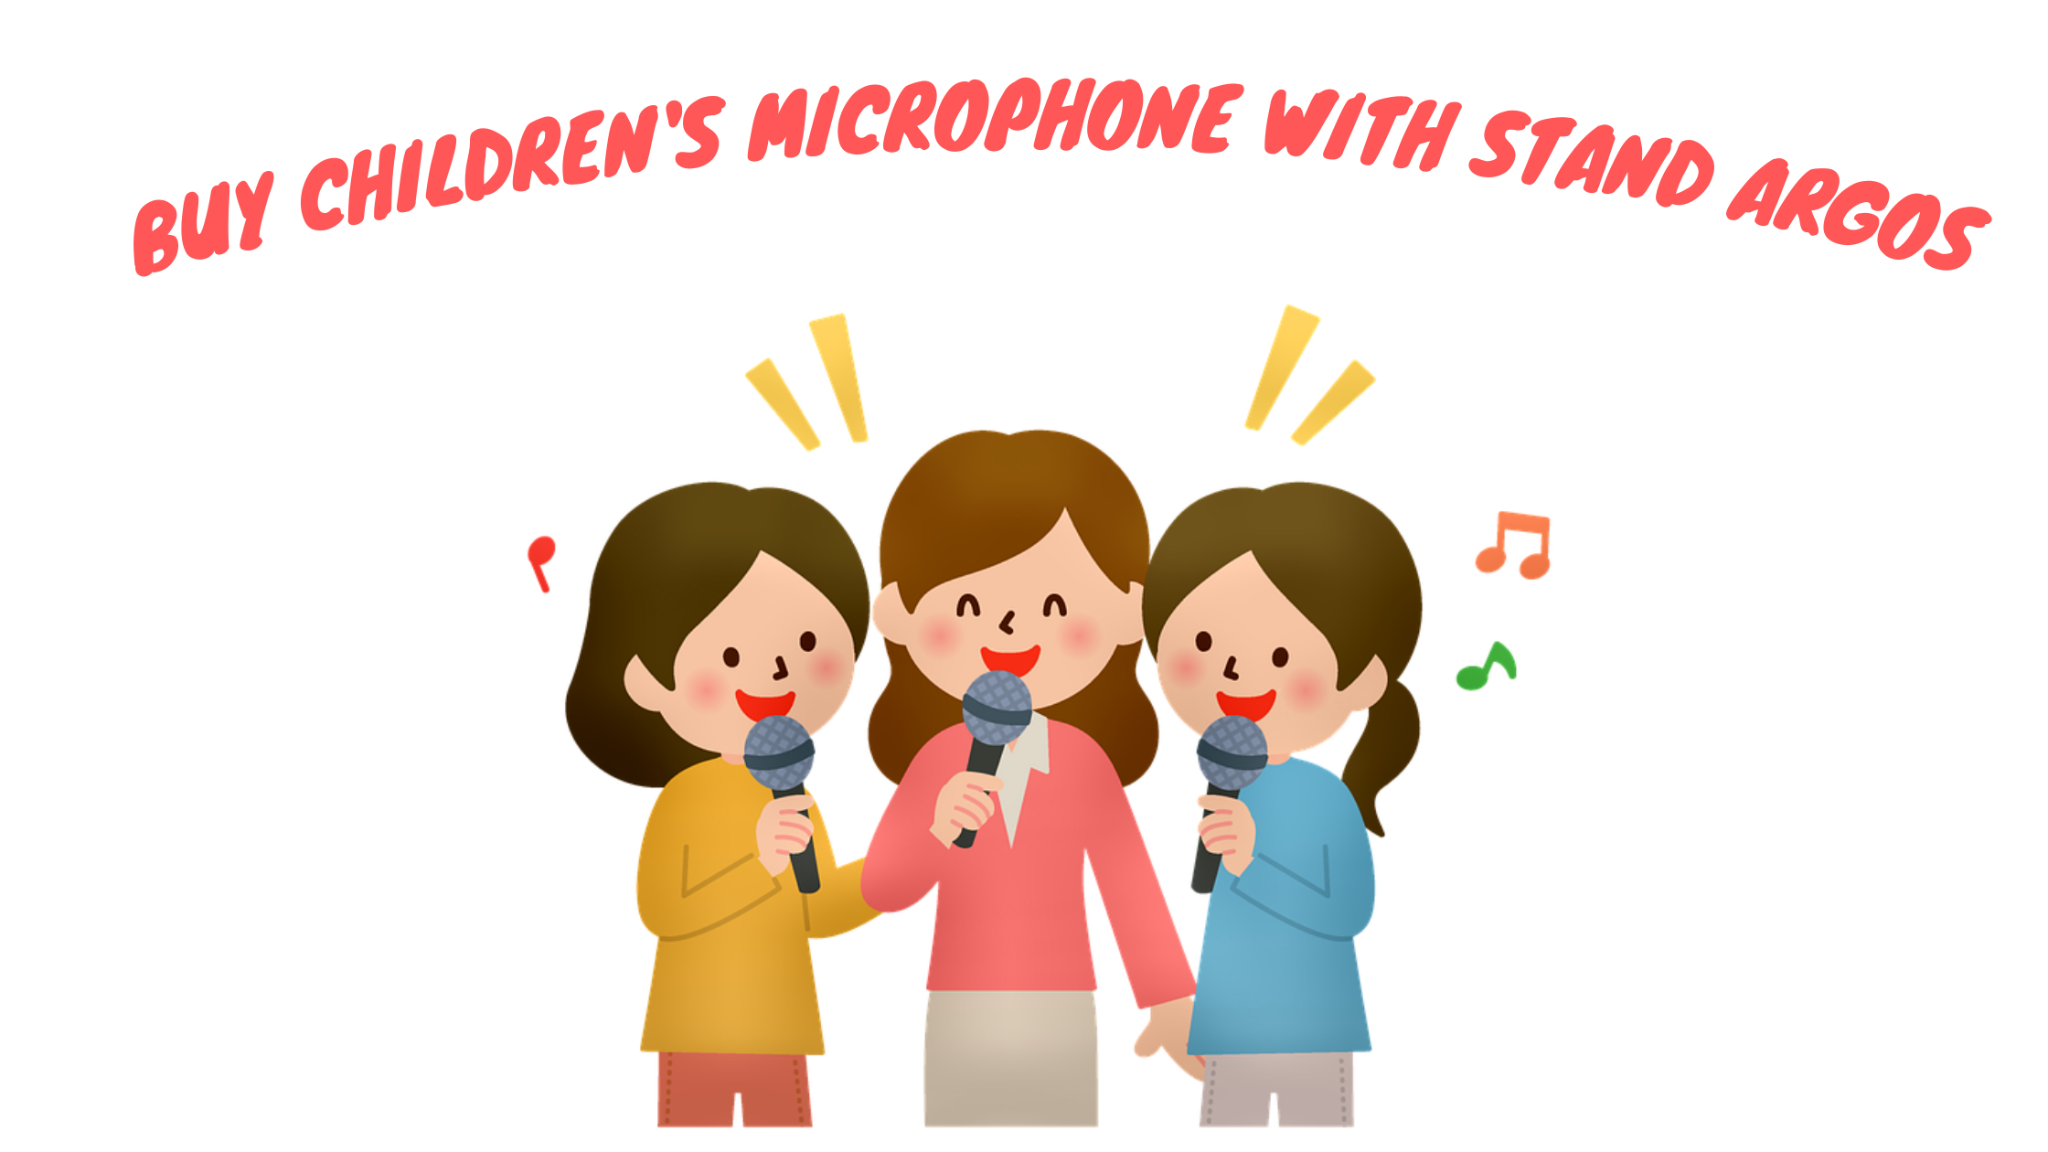 Buy Children Microphone With Stand Argos